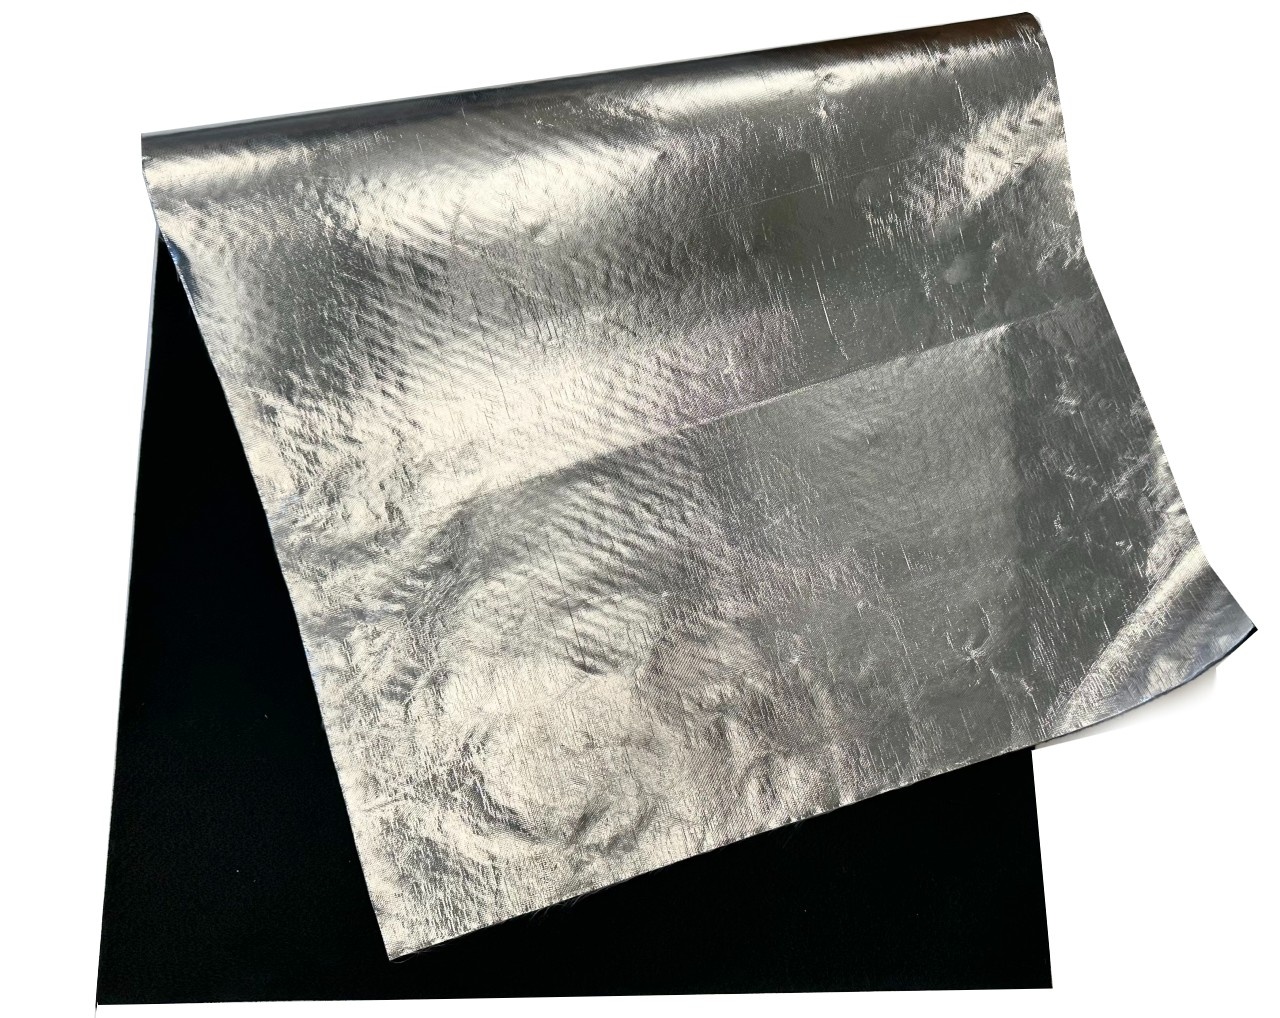 Heat-reflective aluminum tape with glass-fiber reinforced 5cm x 50m